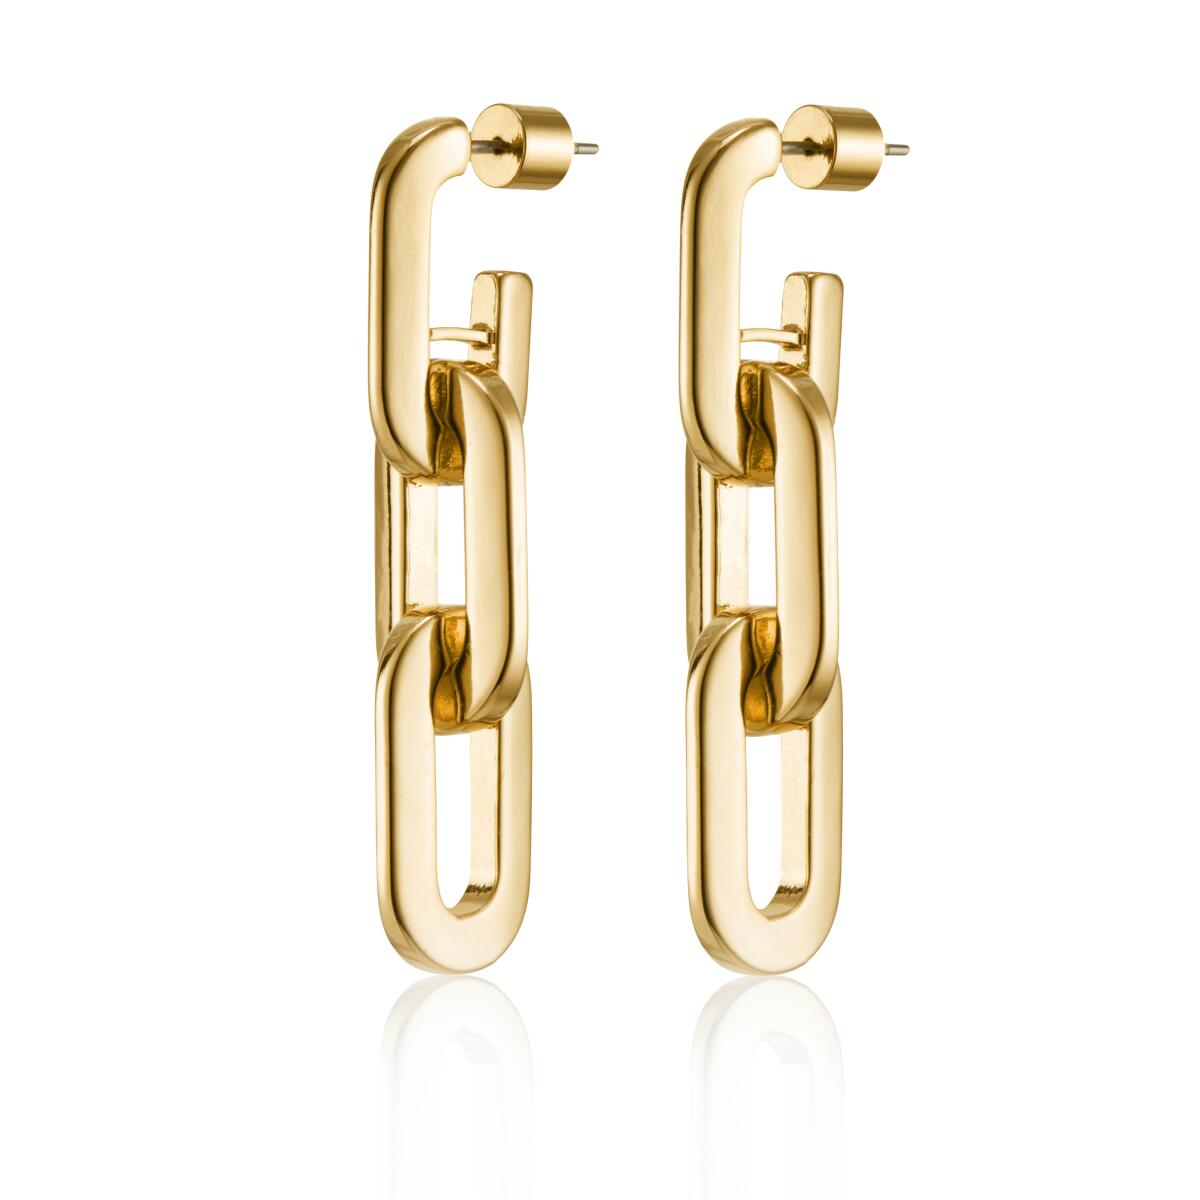 Toni drop earrings featuring 14-karat gold-dipped brass interconnected links.